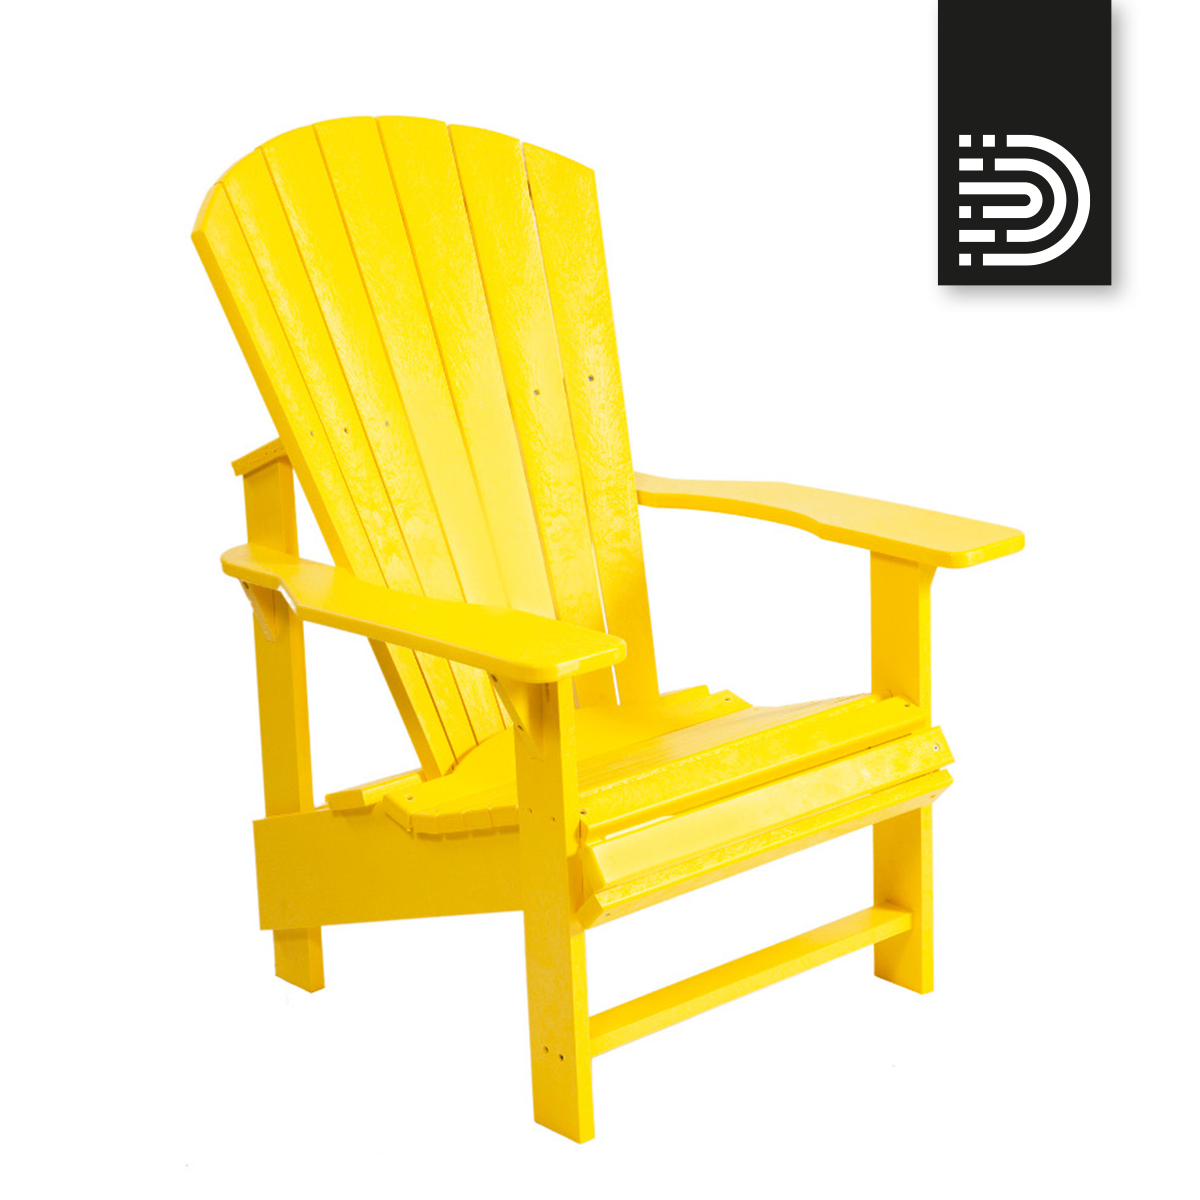 C03 Upright Adirondack Chair -  Yellow 04